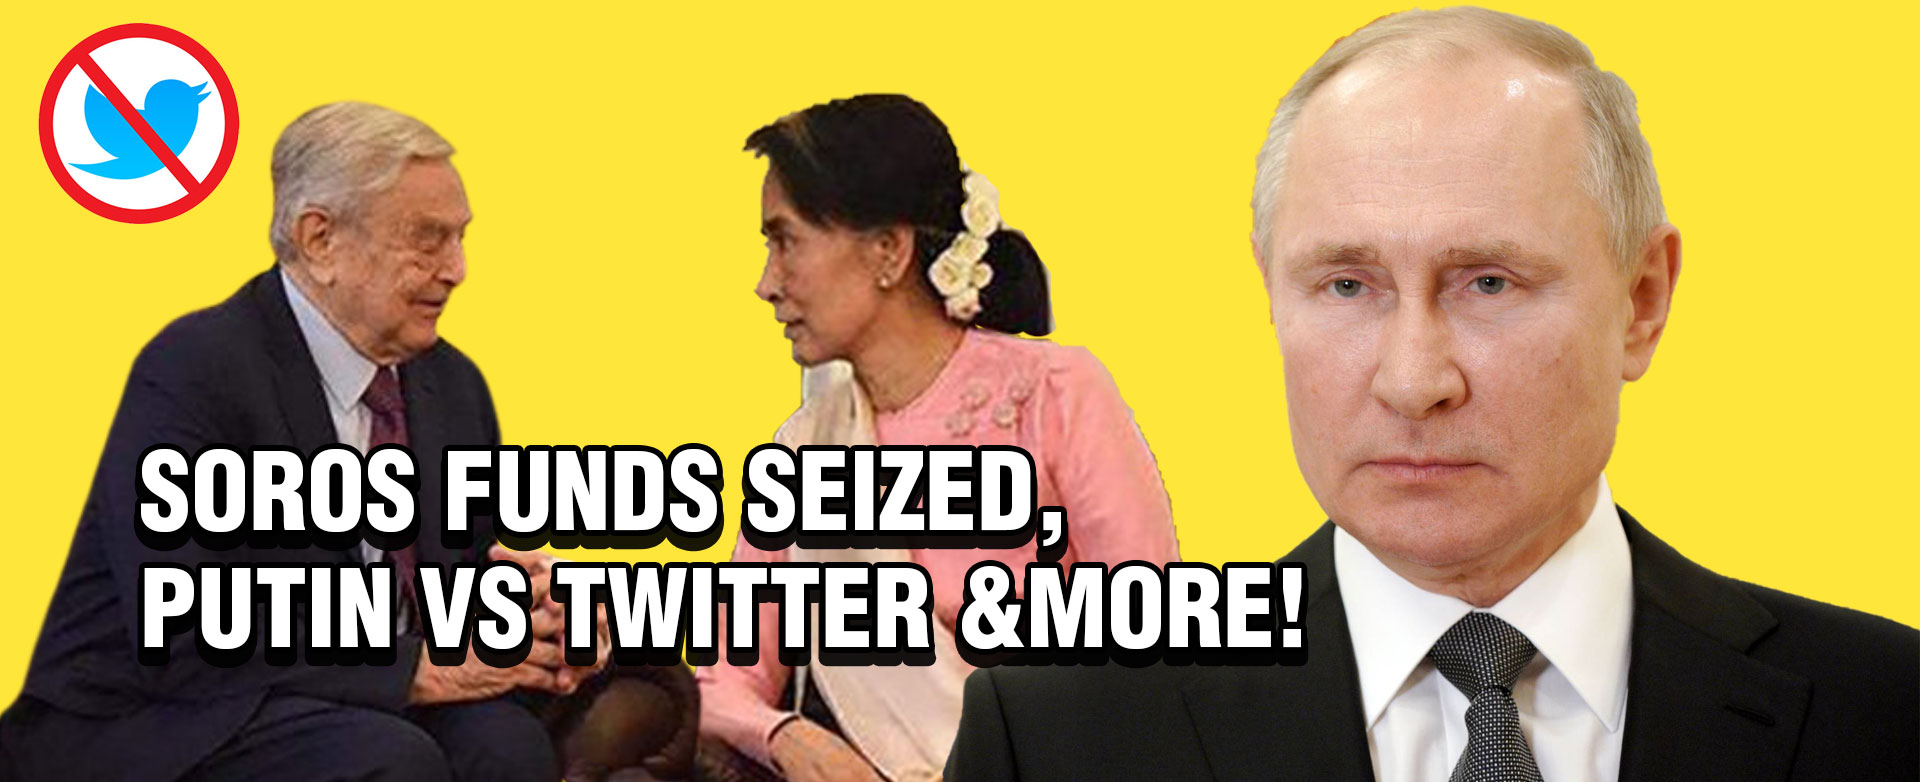 MyPatriotsNetwork-Soros Funds Seized, Putin Vs Twitter & More! March 17, 2021 Update